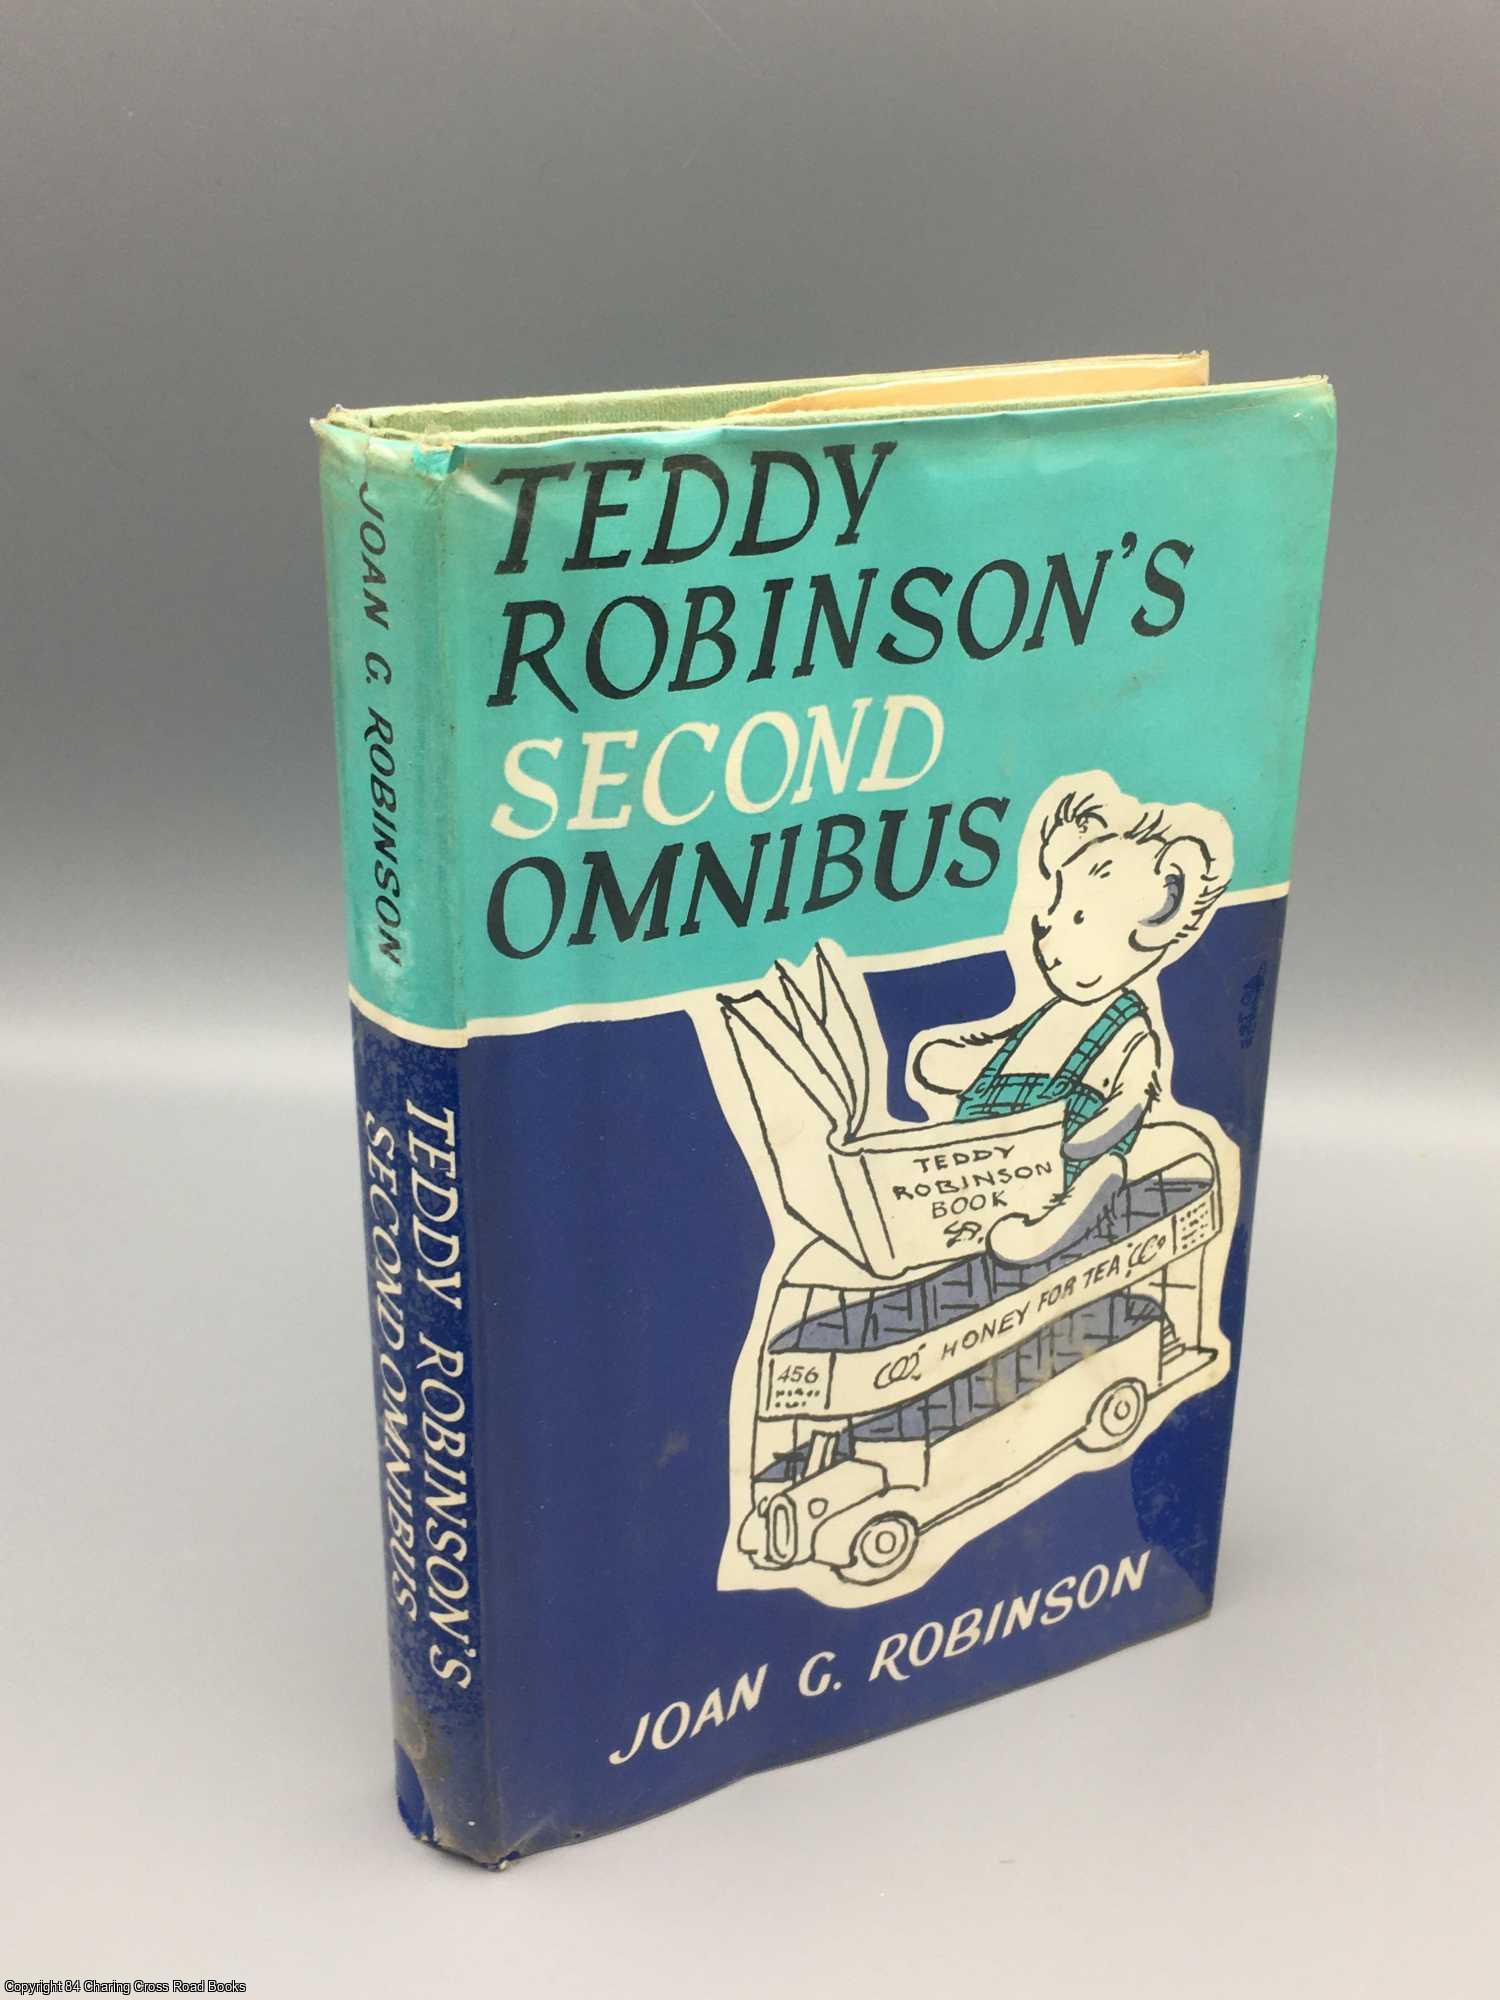 Robinson, Joan G - Teddy Robinson's second omnibus